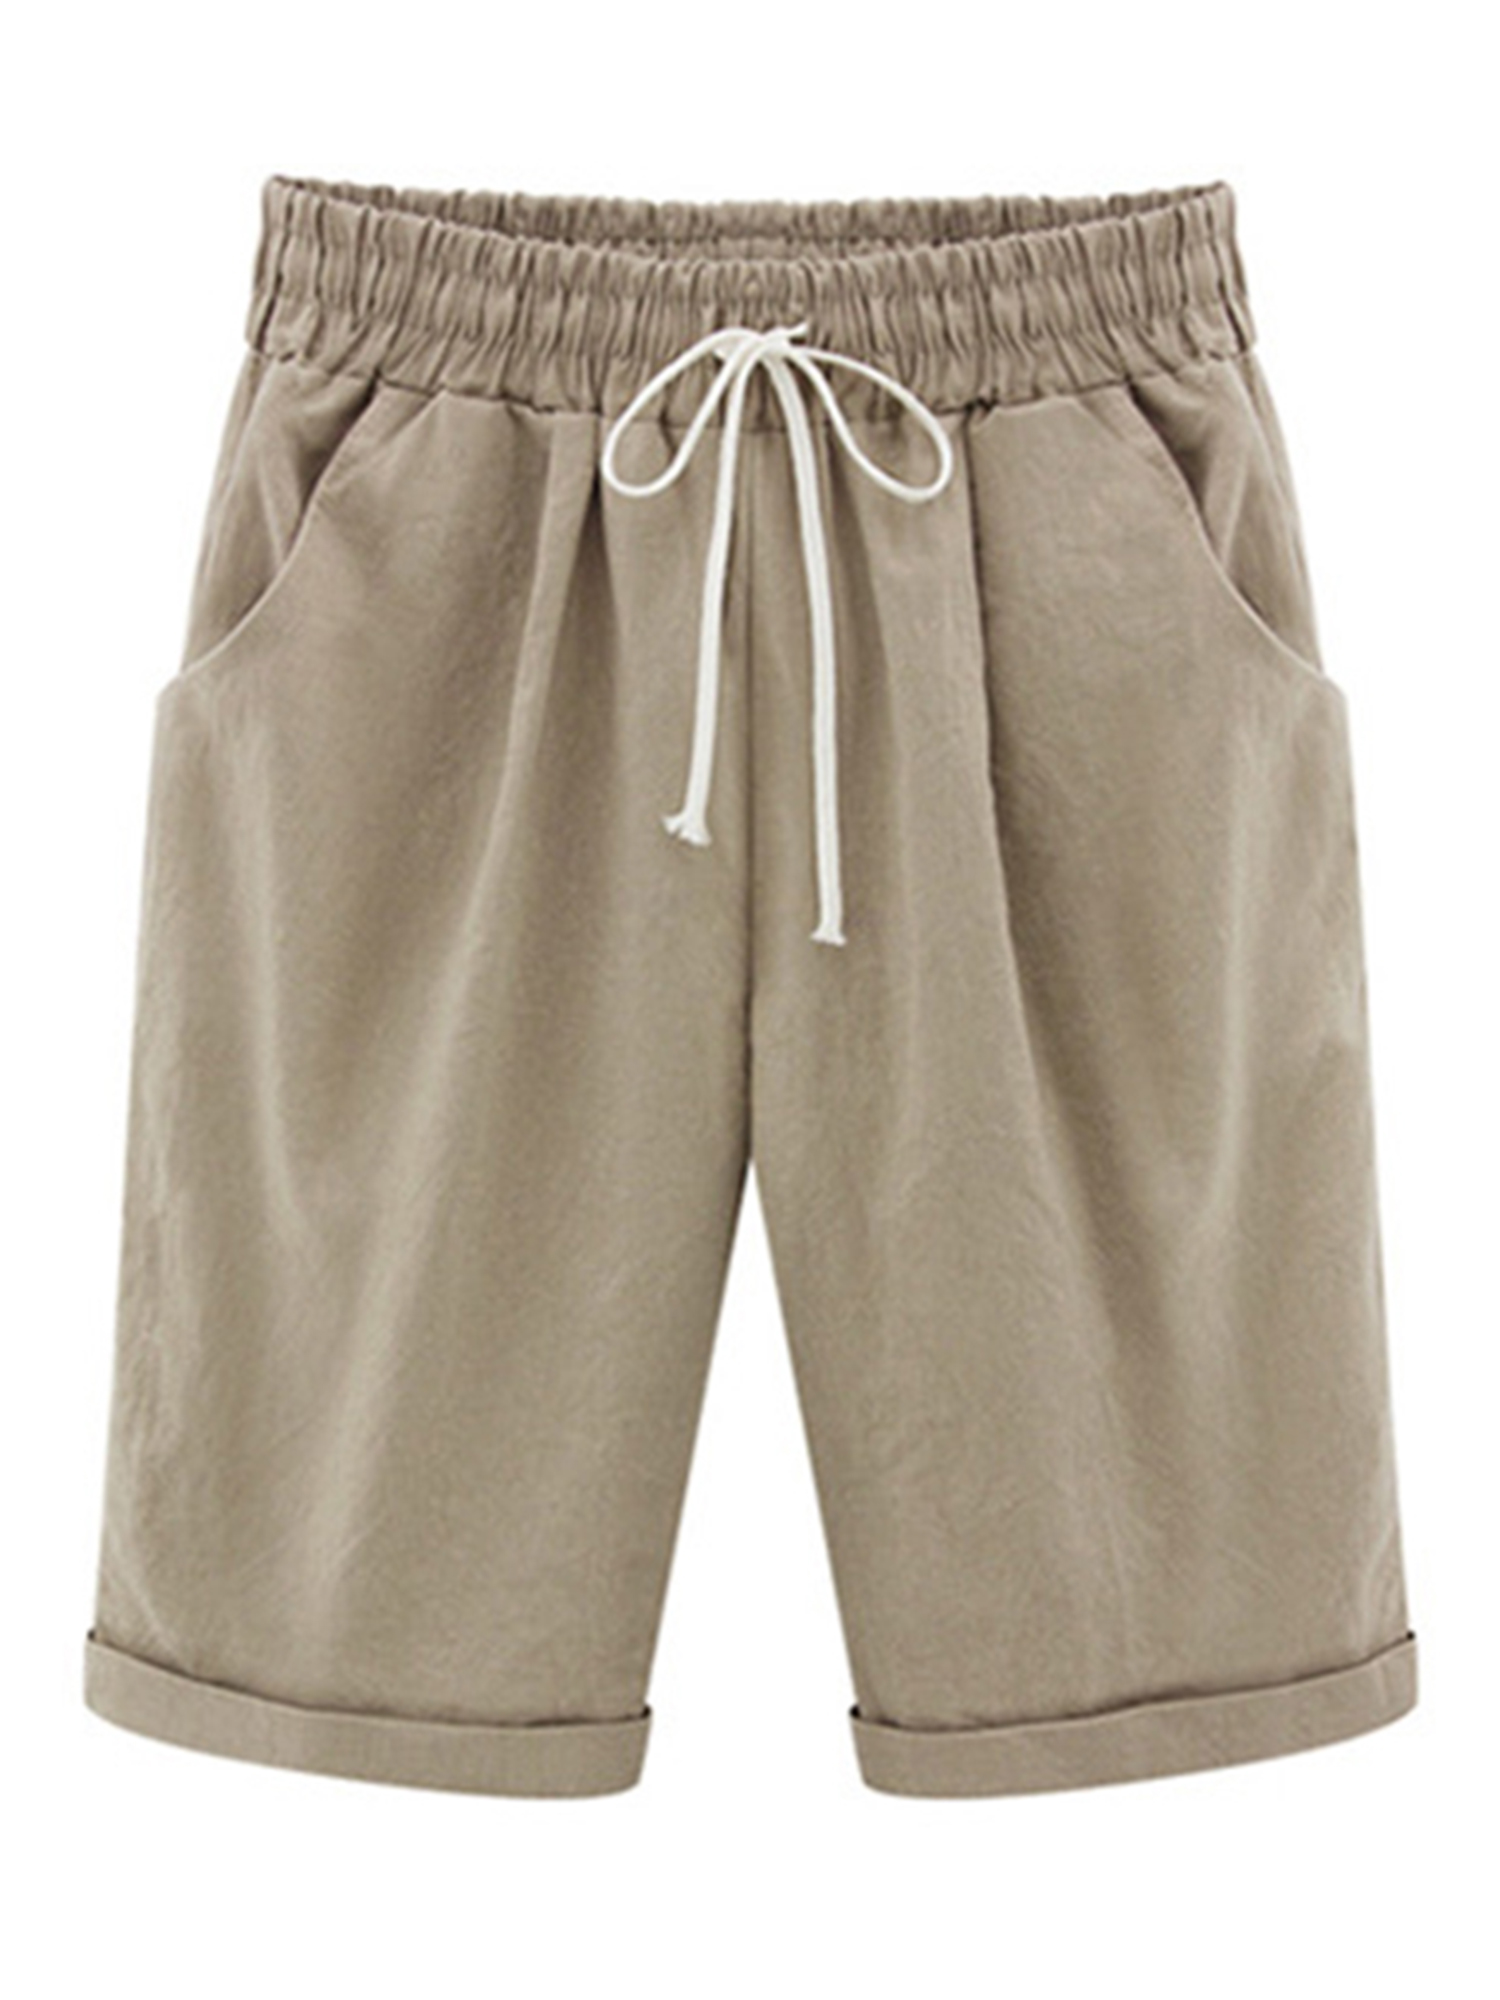 Niuer Women Summer Shorts Casual Lounge Wear Short Hot Pants Ladies Bermuda Shorts Ladies High Waist Beach Knee Length Pockets Short Trousers - image 3 of 6